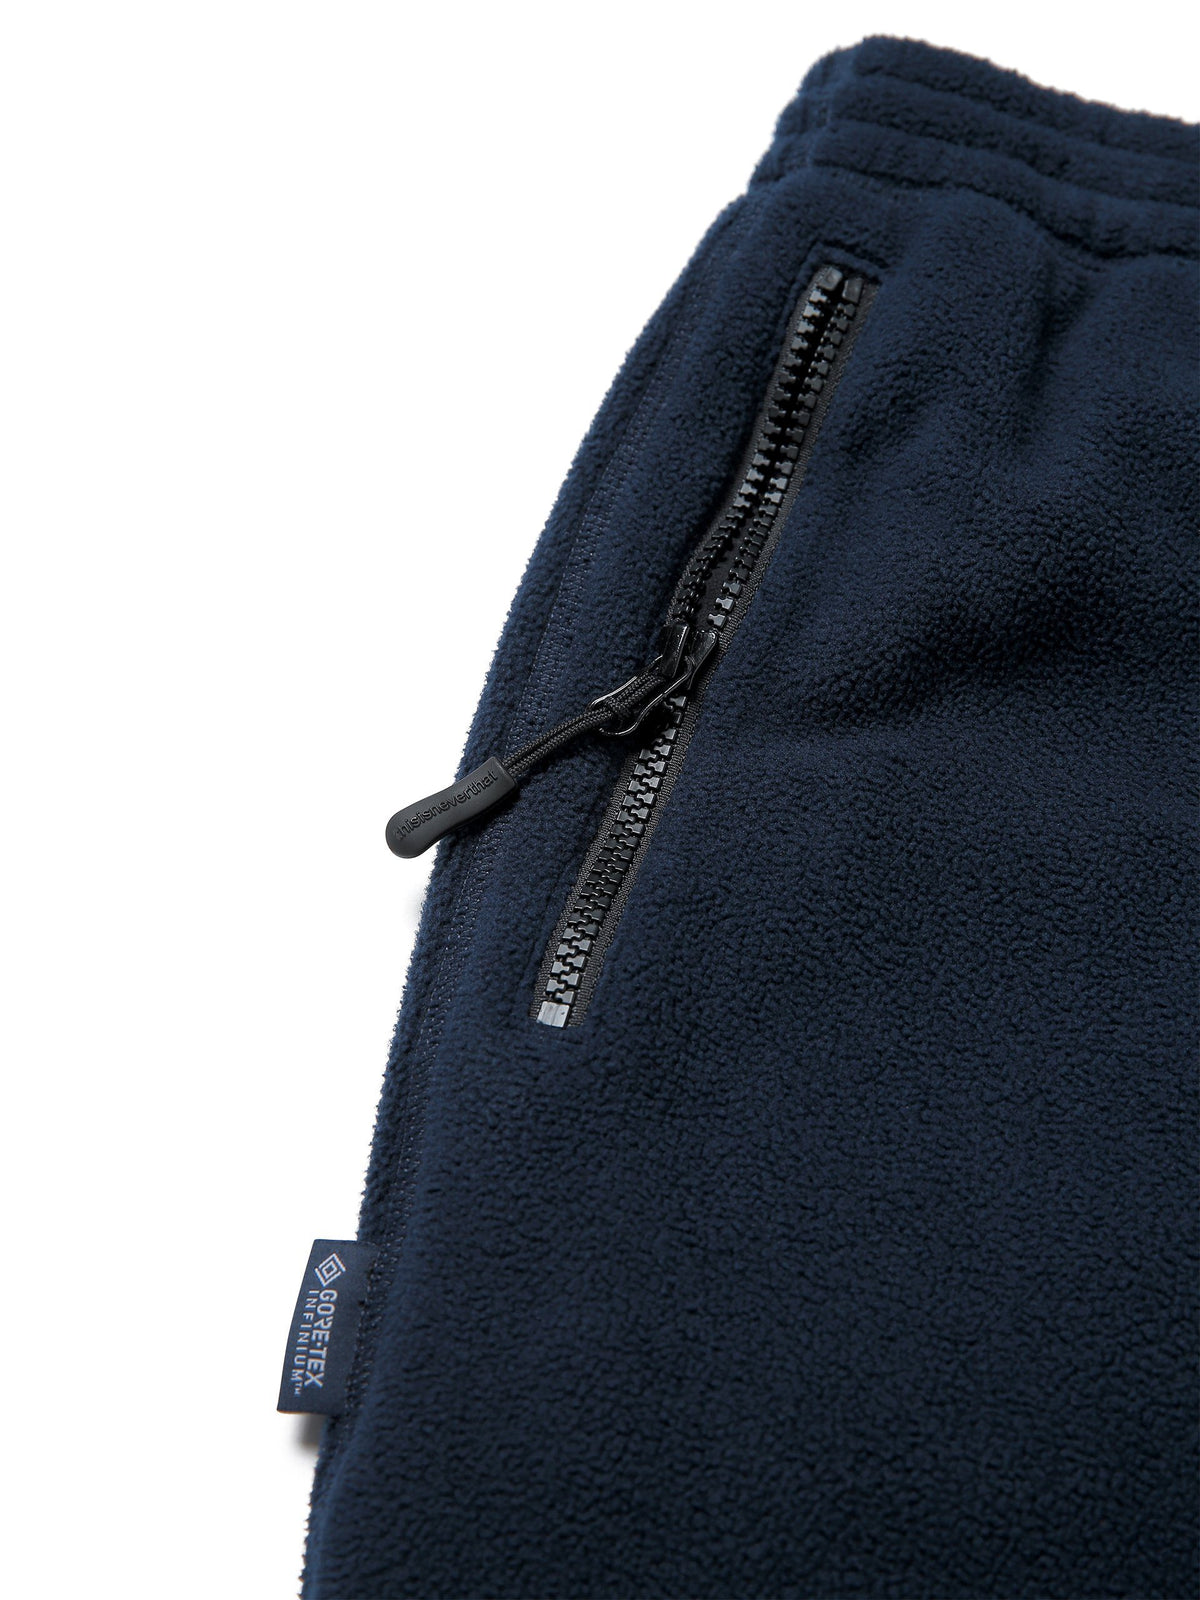 GORE-TEX® INFINIUM™ Fleece Pant Pants 